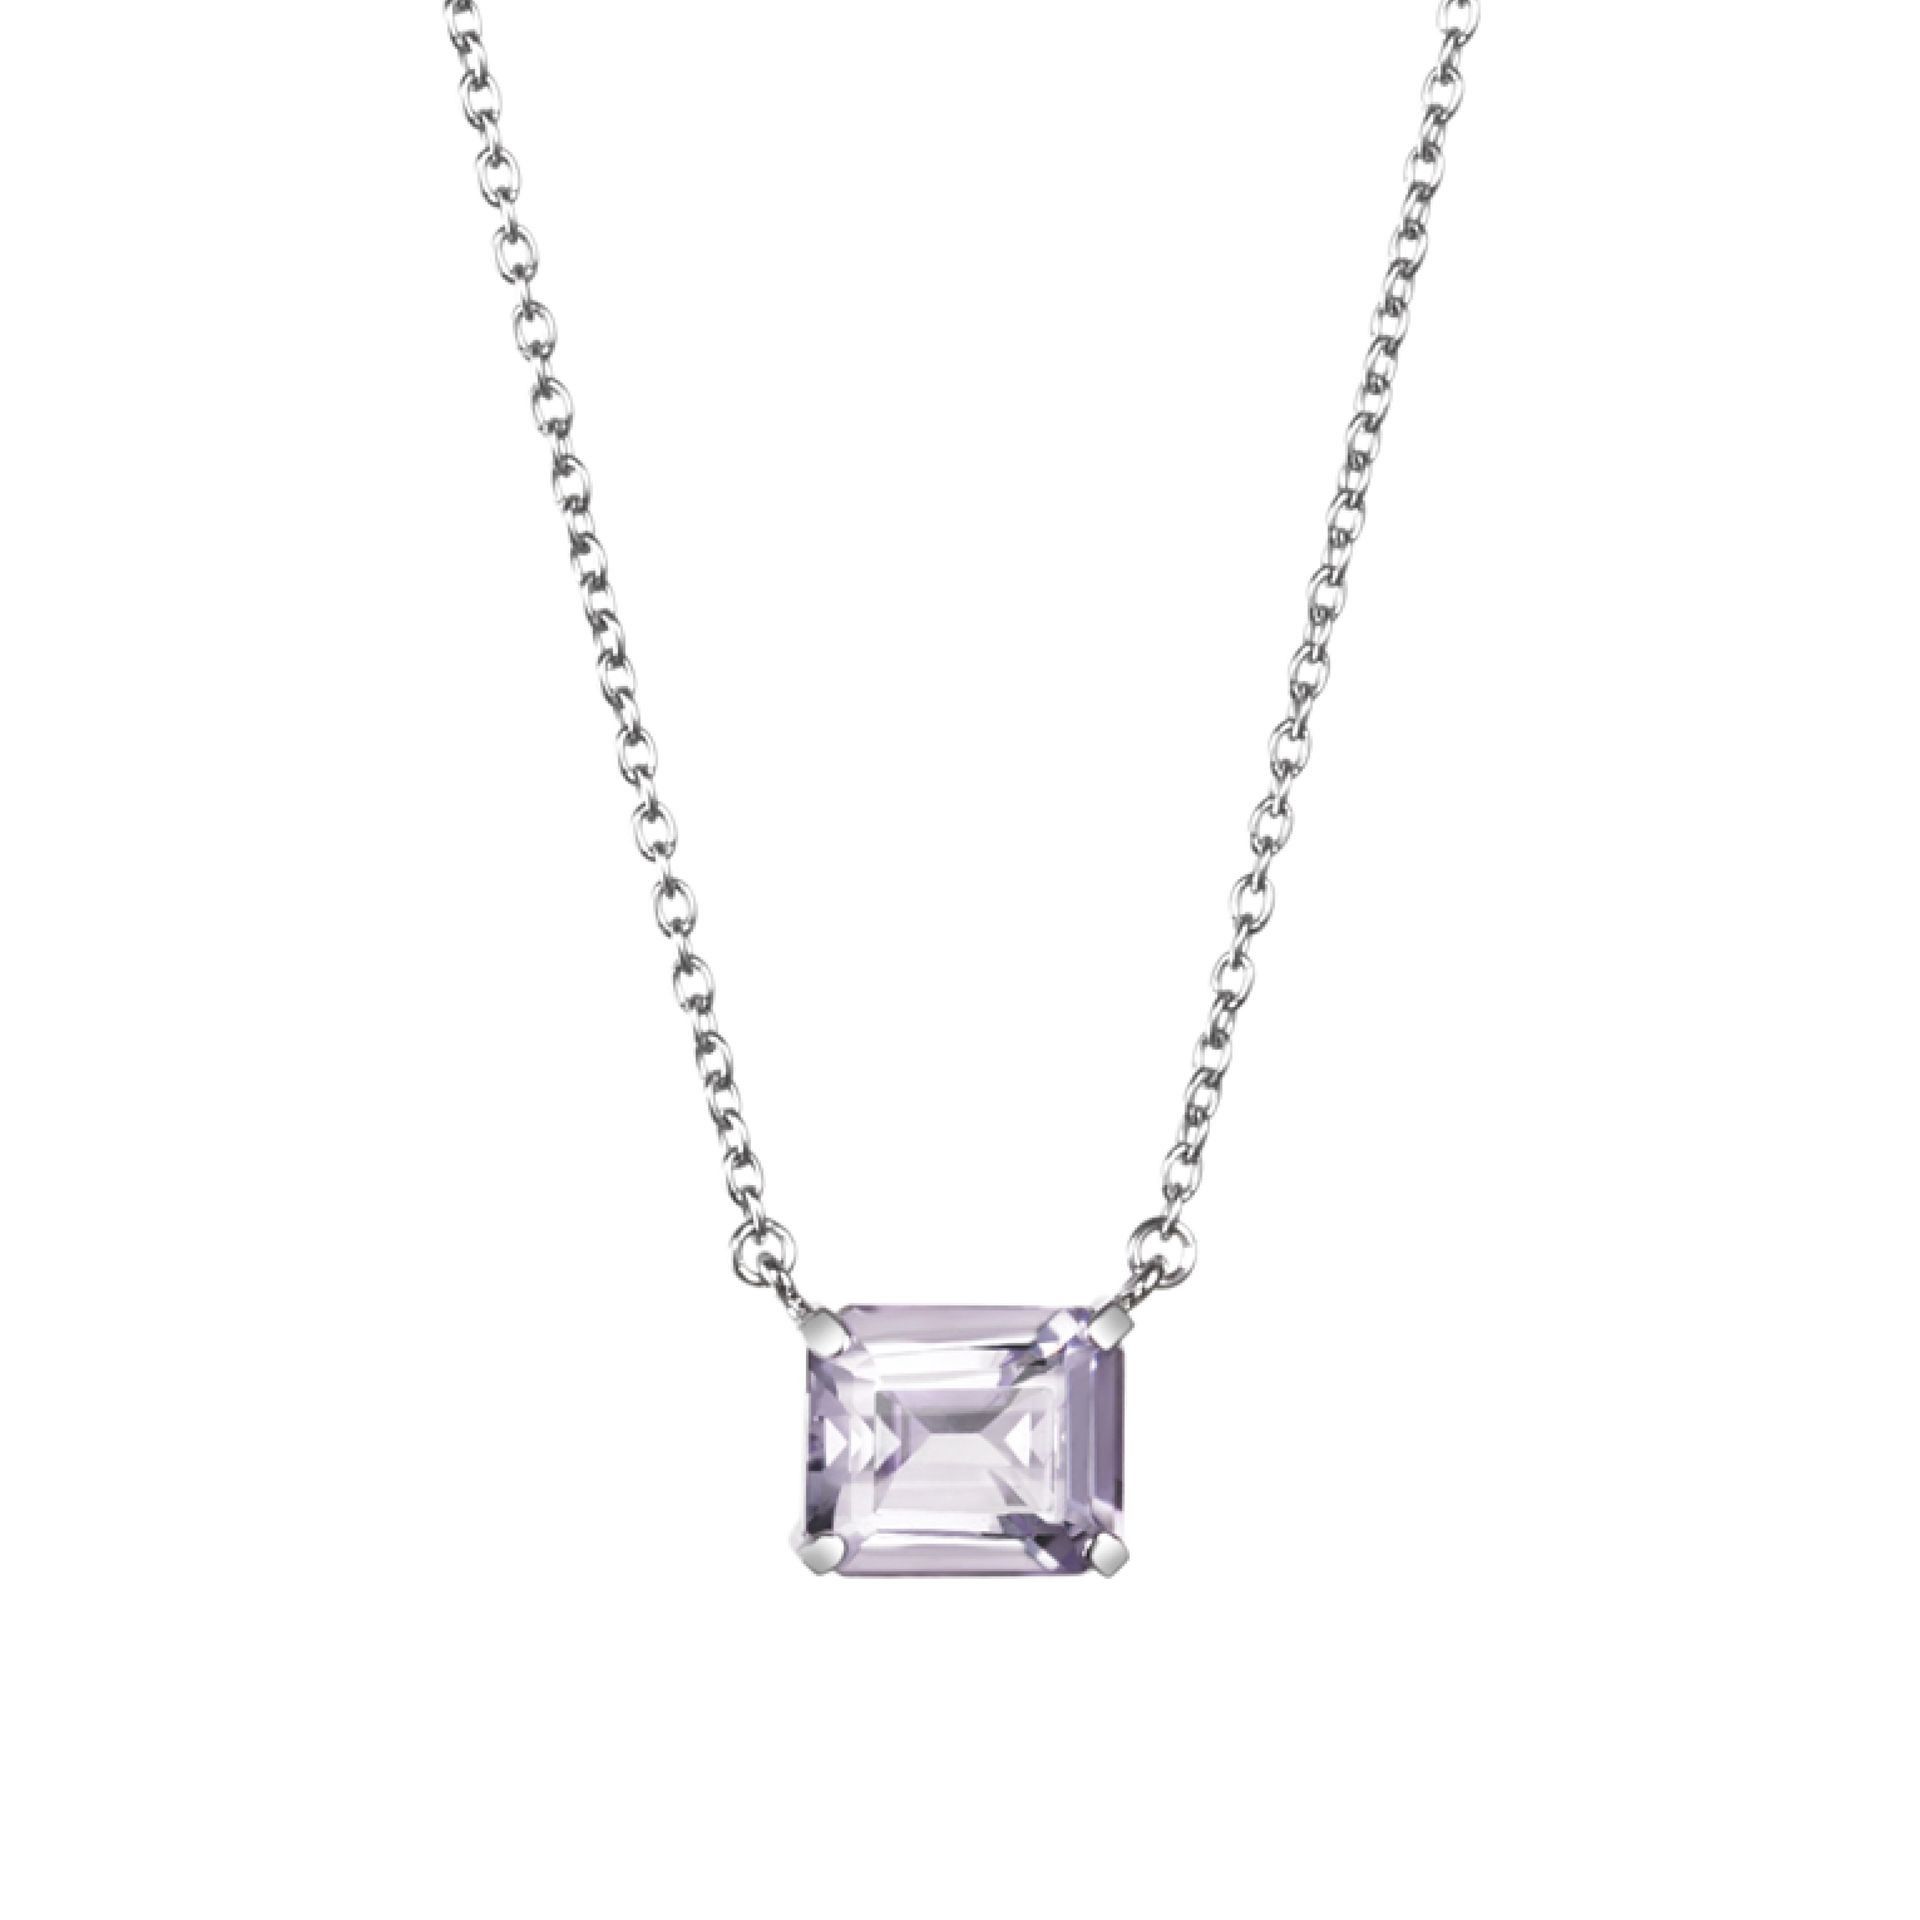 Efva Attling A Purple Dream Necklace. 42/45 CM - SILVER